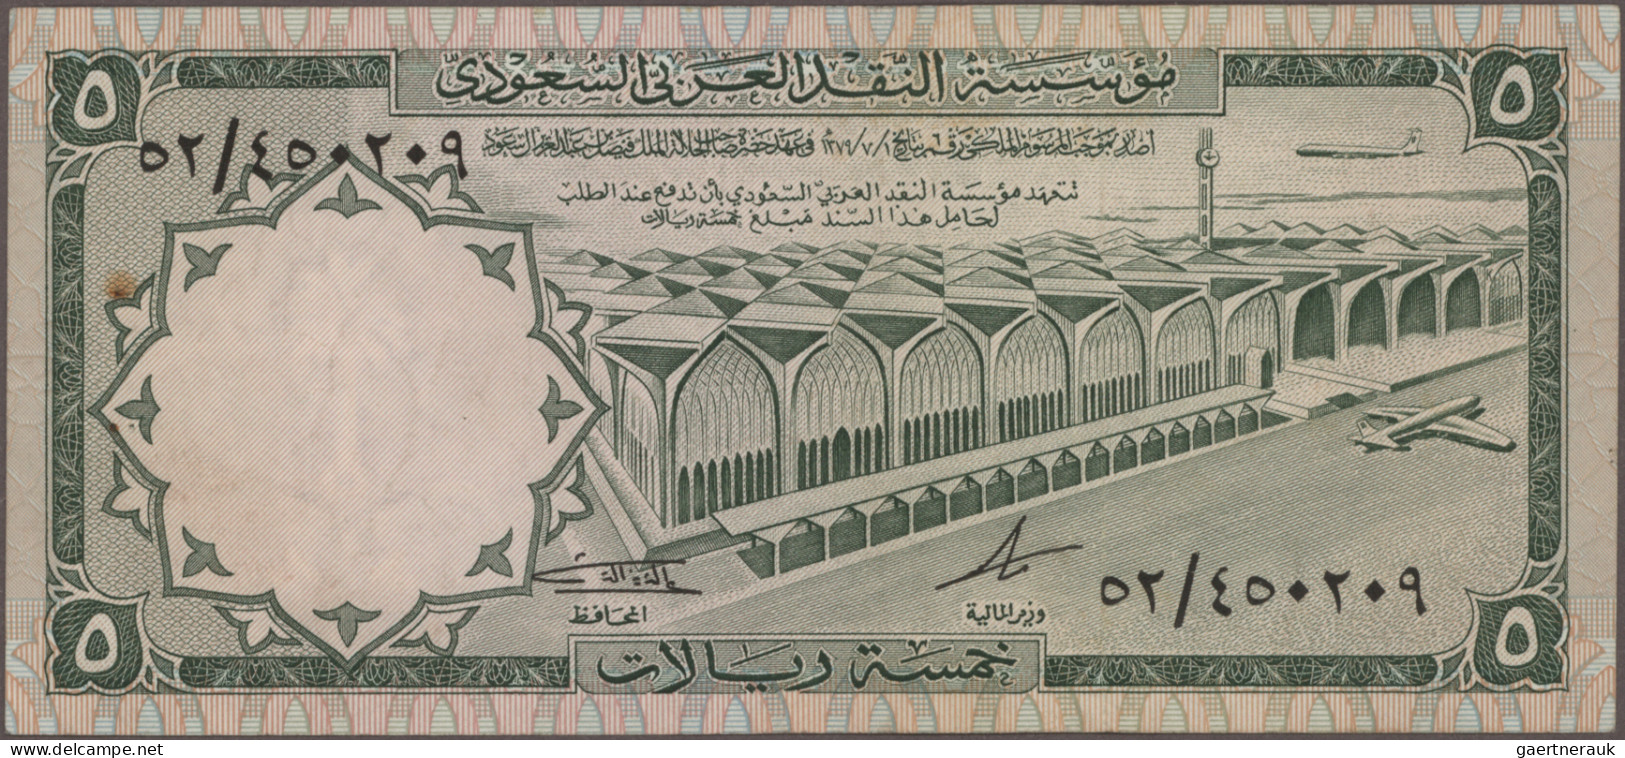 Saudi Arabia: Saudi Arabian Monetary Agency, lot with 5 banknotes, series AH1379